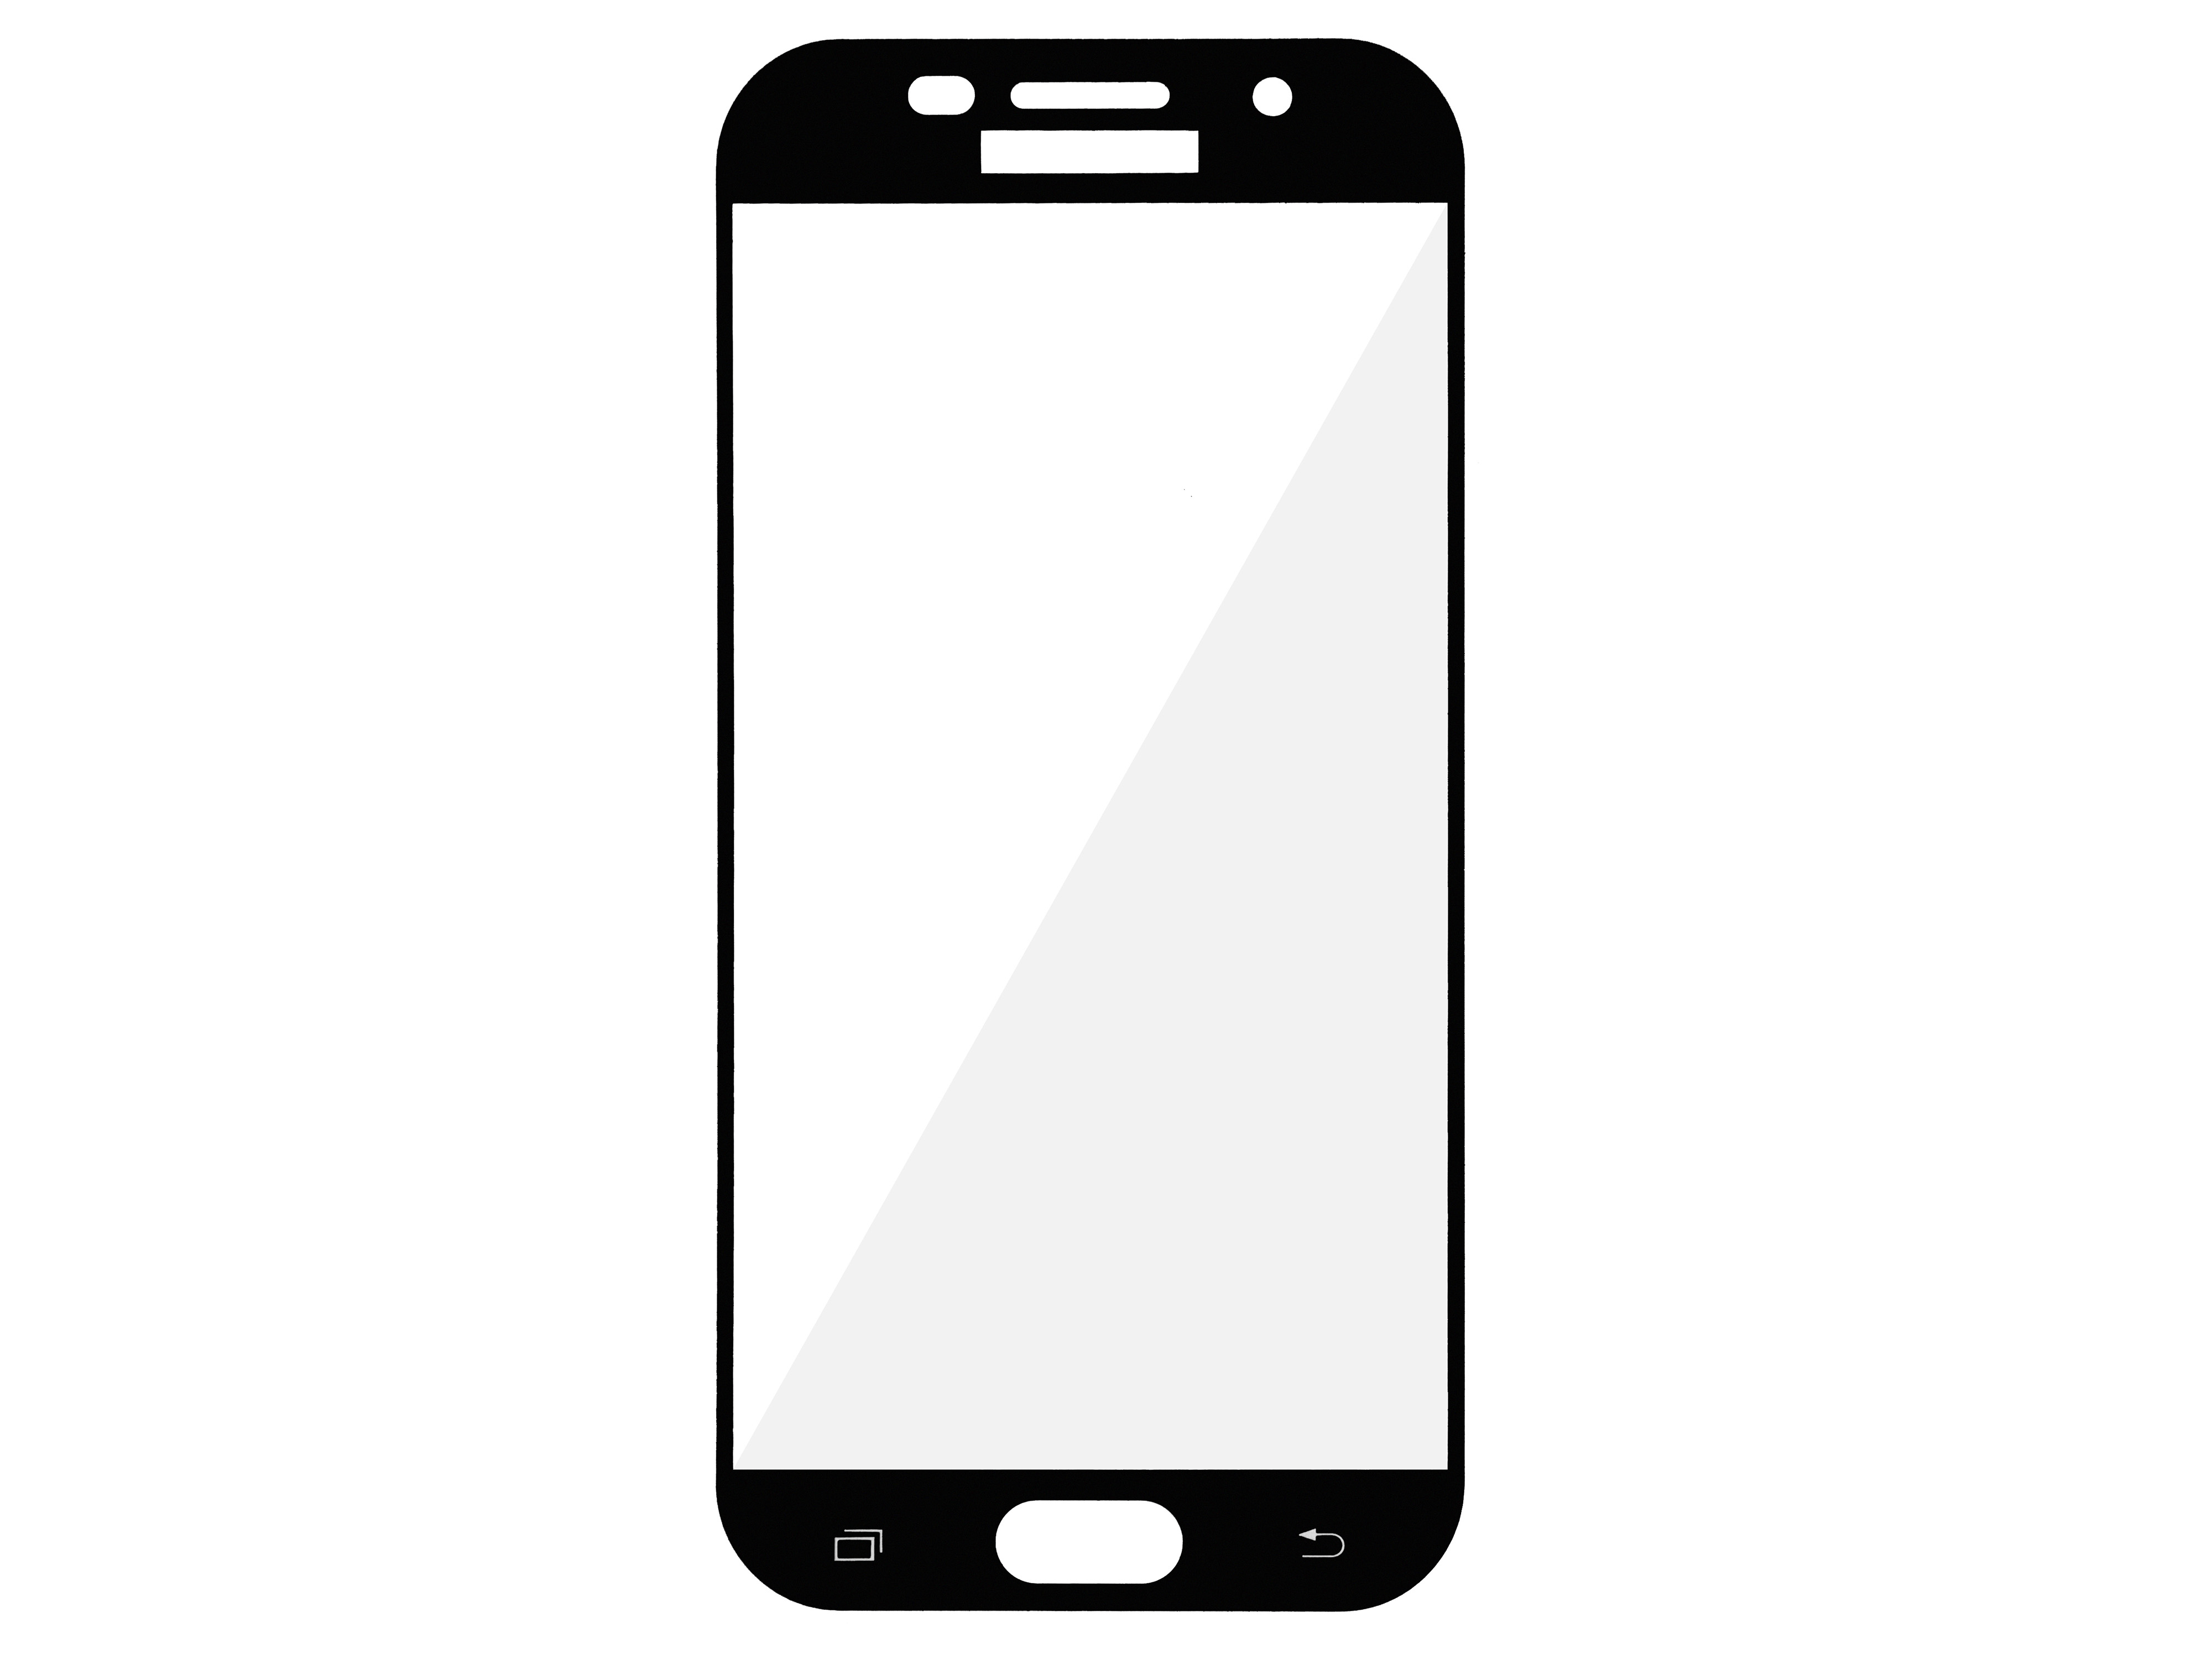 Screen Protector GC Clarity for Samsung Galaxy A5